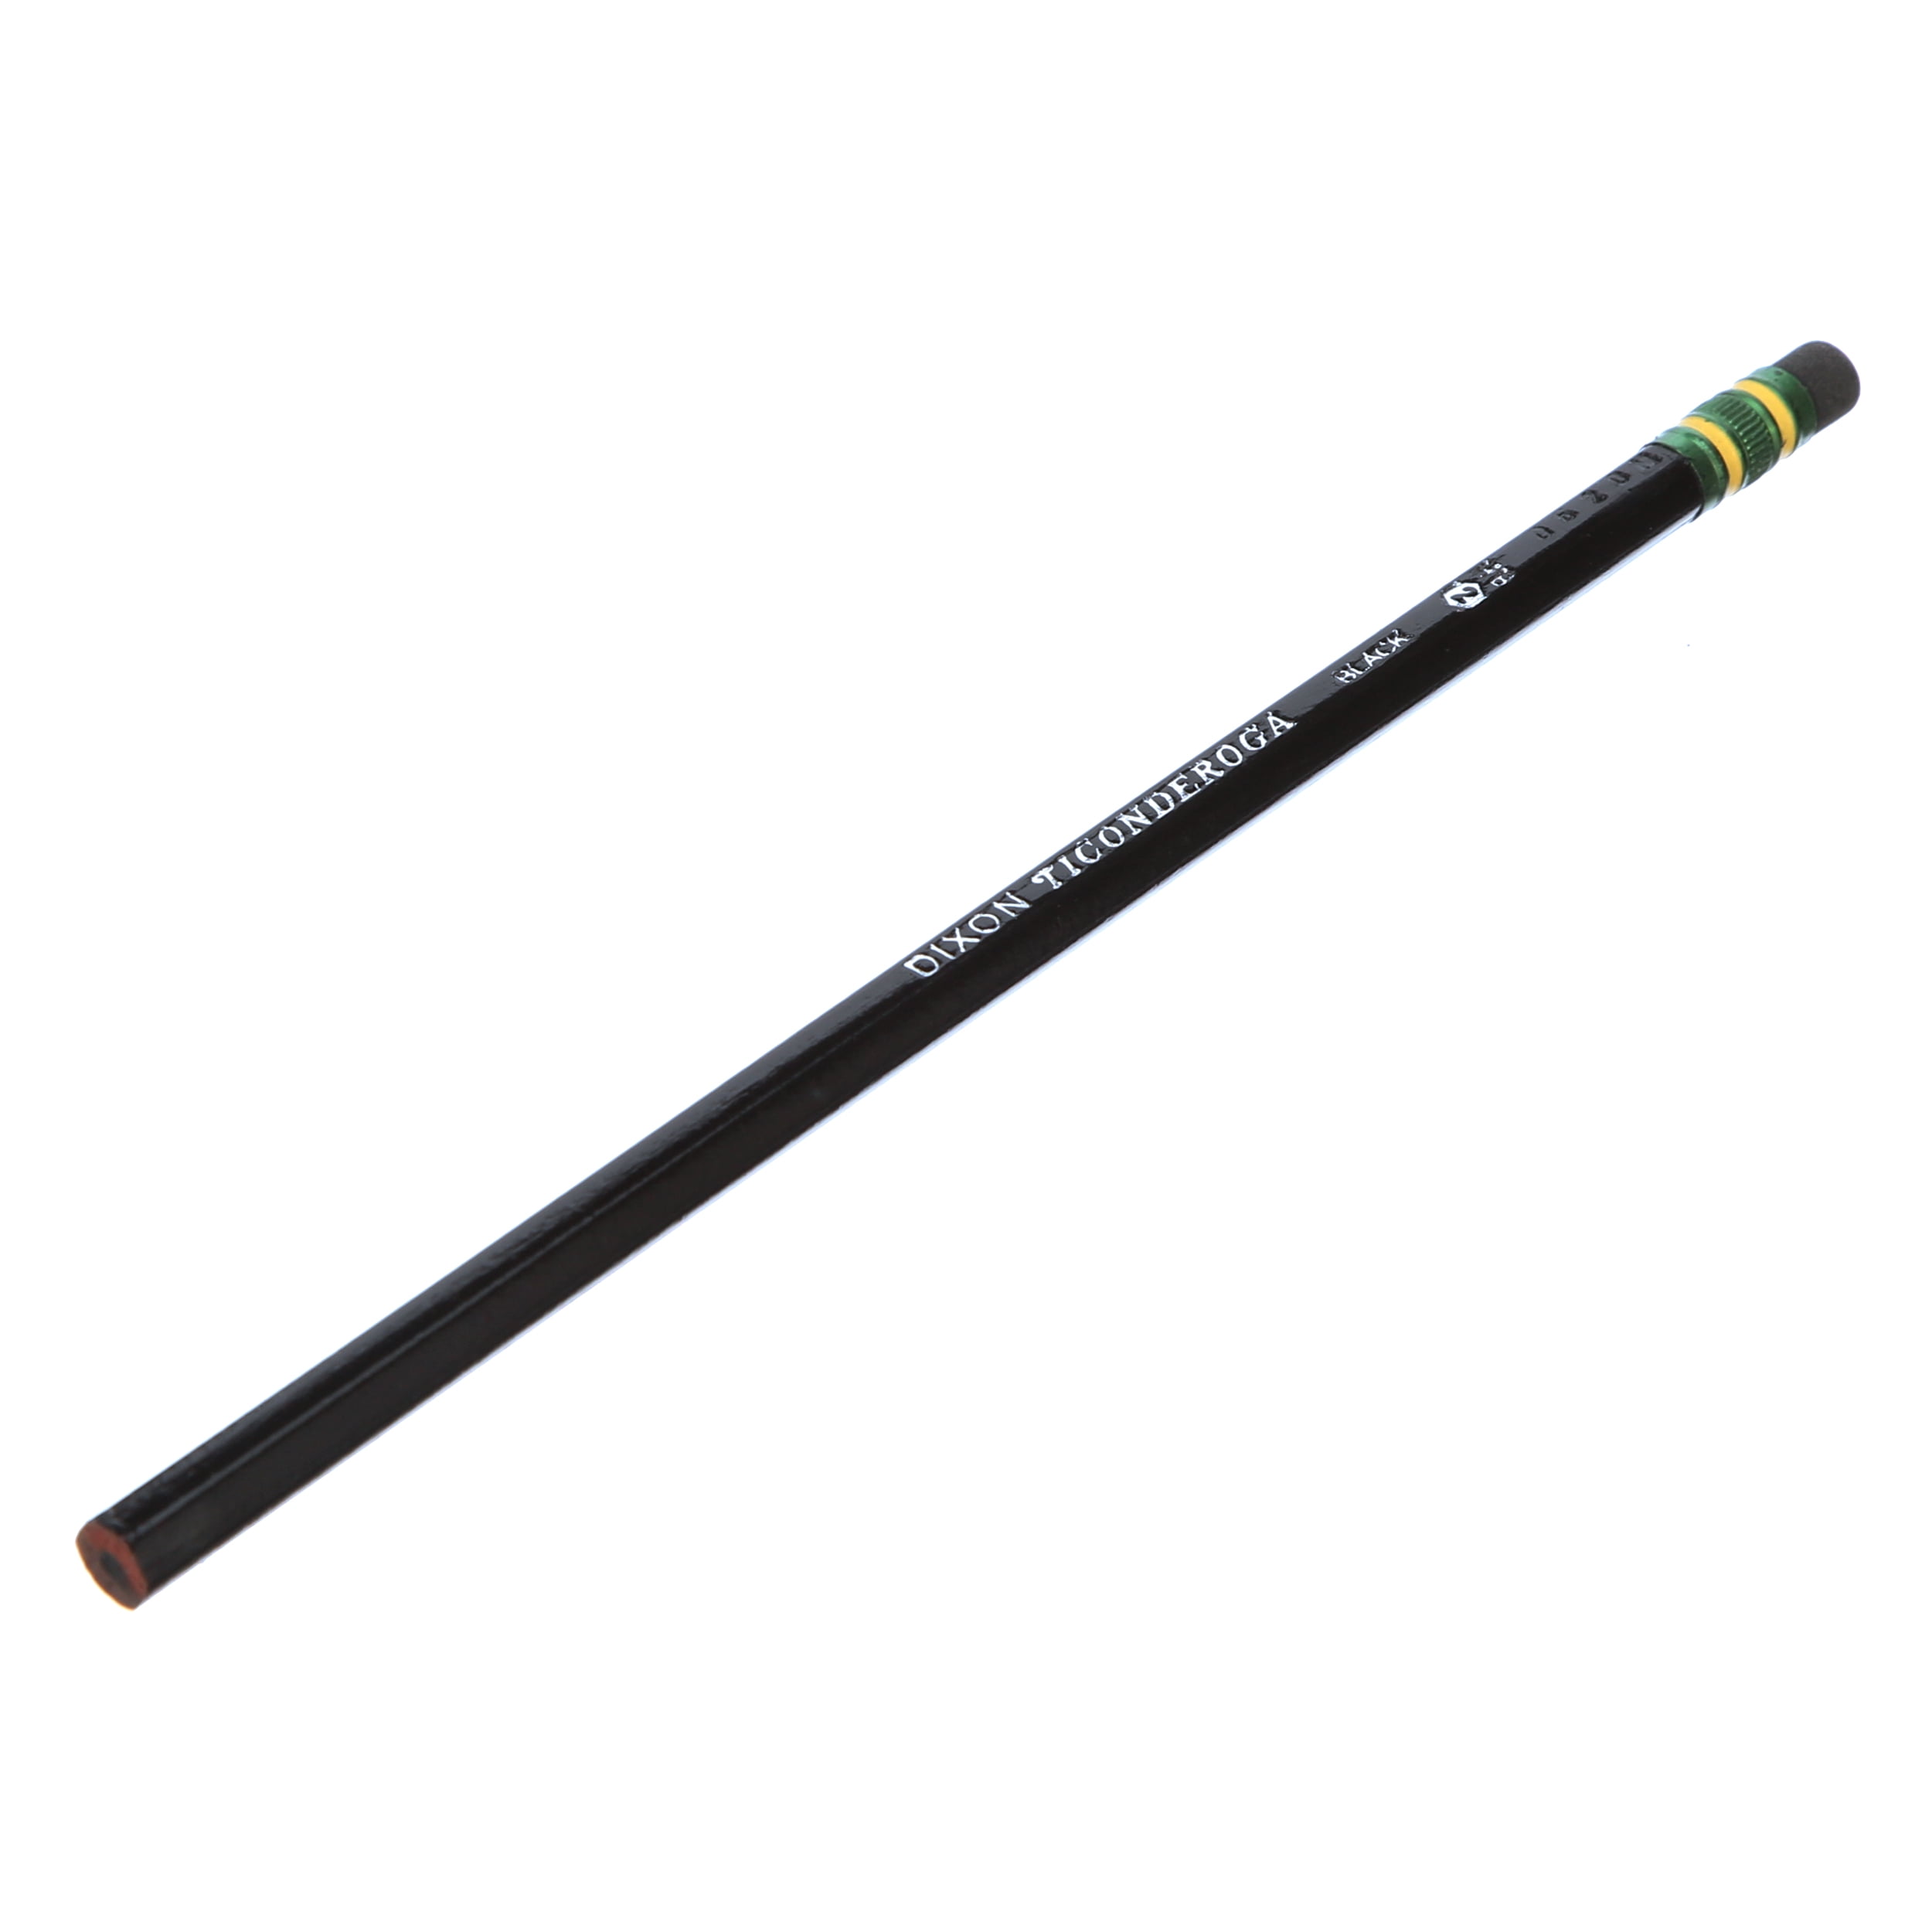 Yubbler - Ticonderoga Pencils, #2 Lead, Medium Soft, Pack of 24